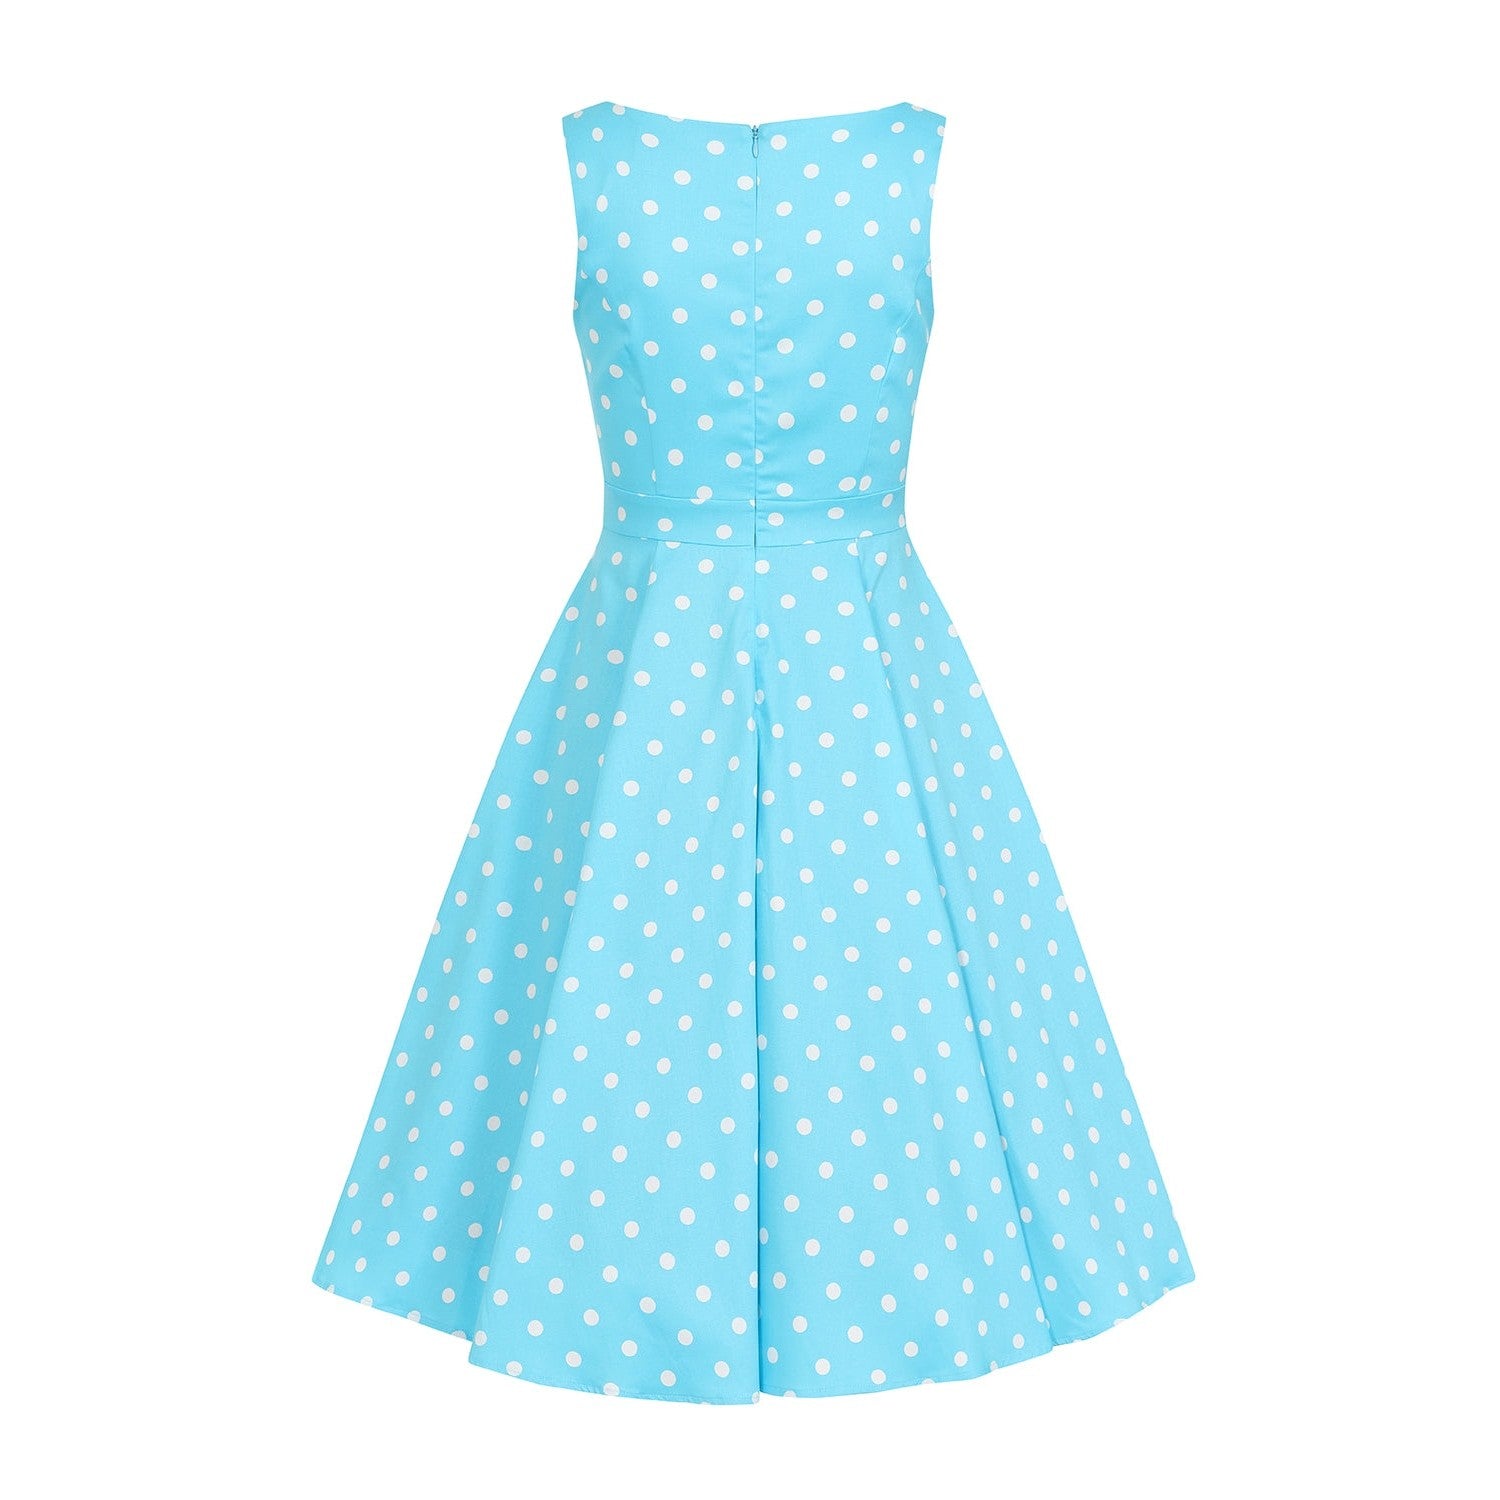 Pretty Blue Turquoise White Polka Dot Sleeveless Rockabilly 50s Swing Dress